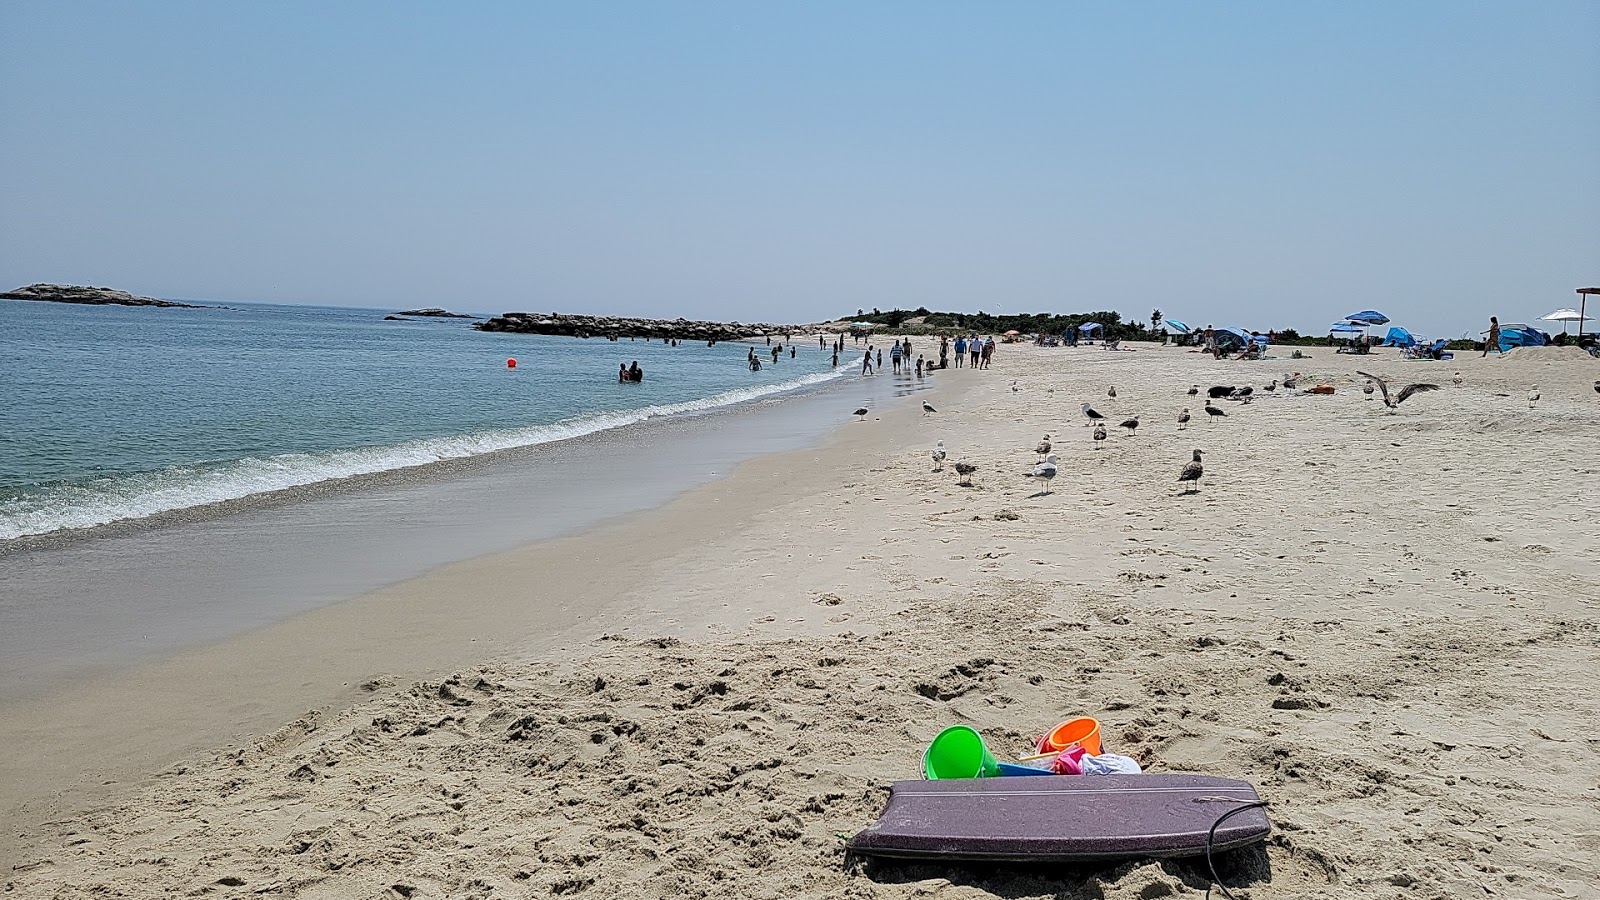 Fotografie cu Ocean Beach cu nivelul de curățenie in medie